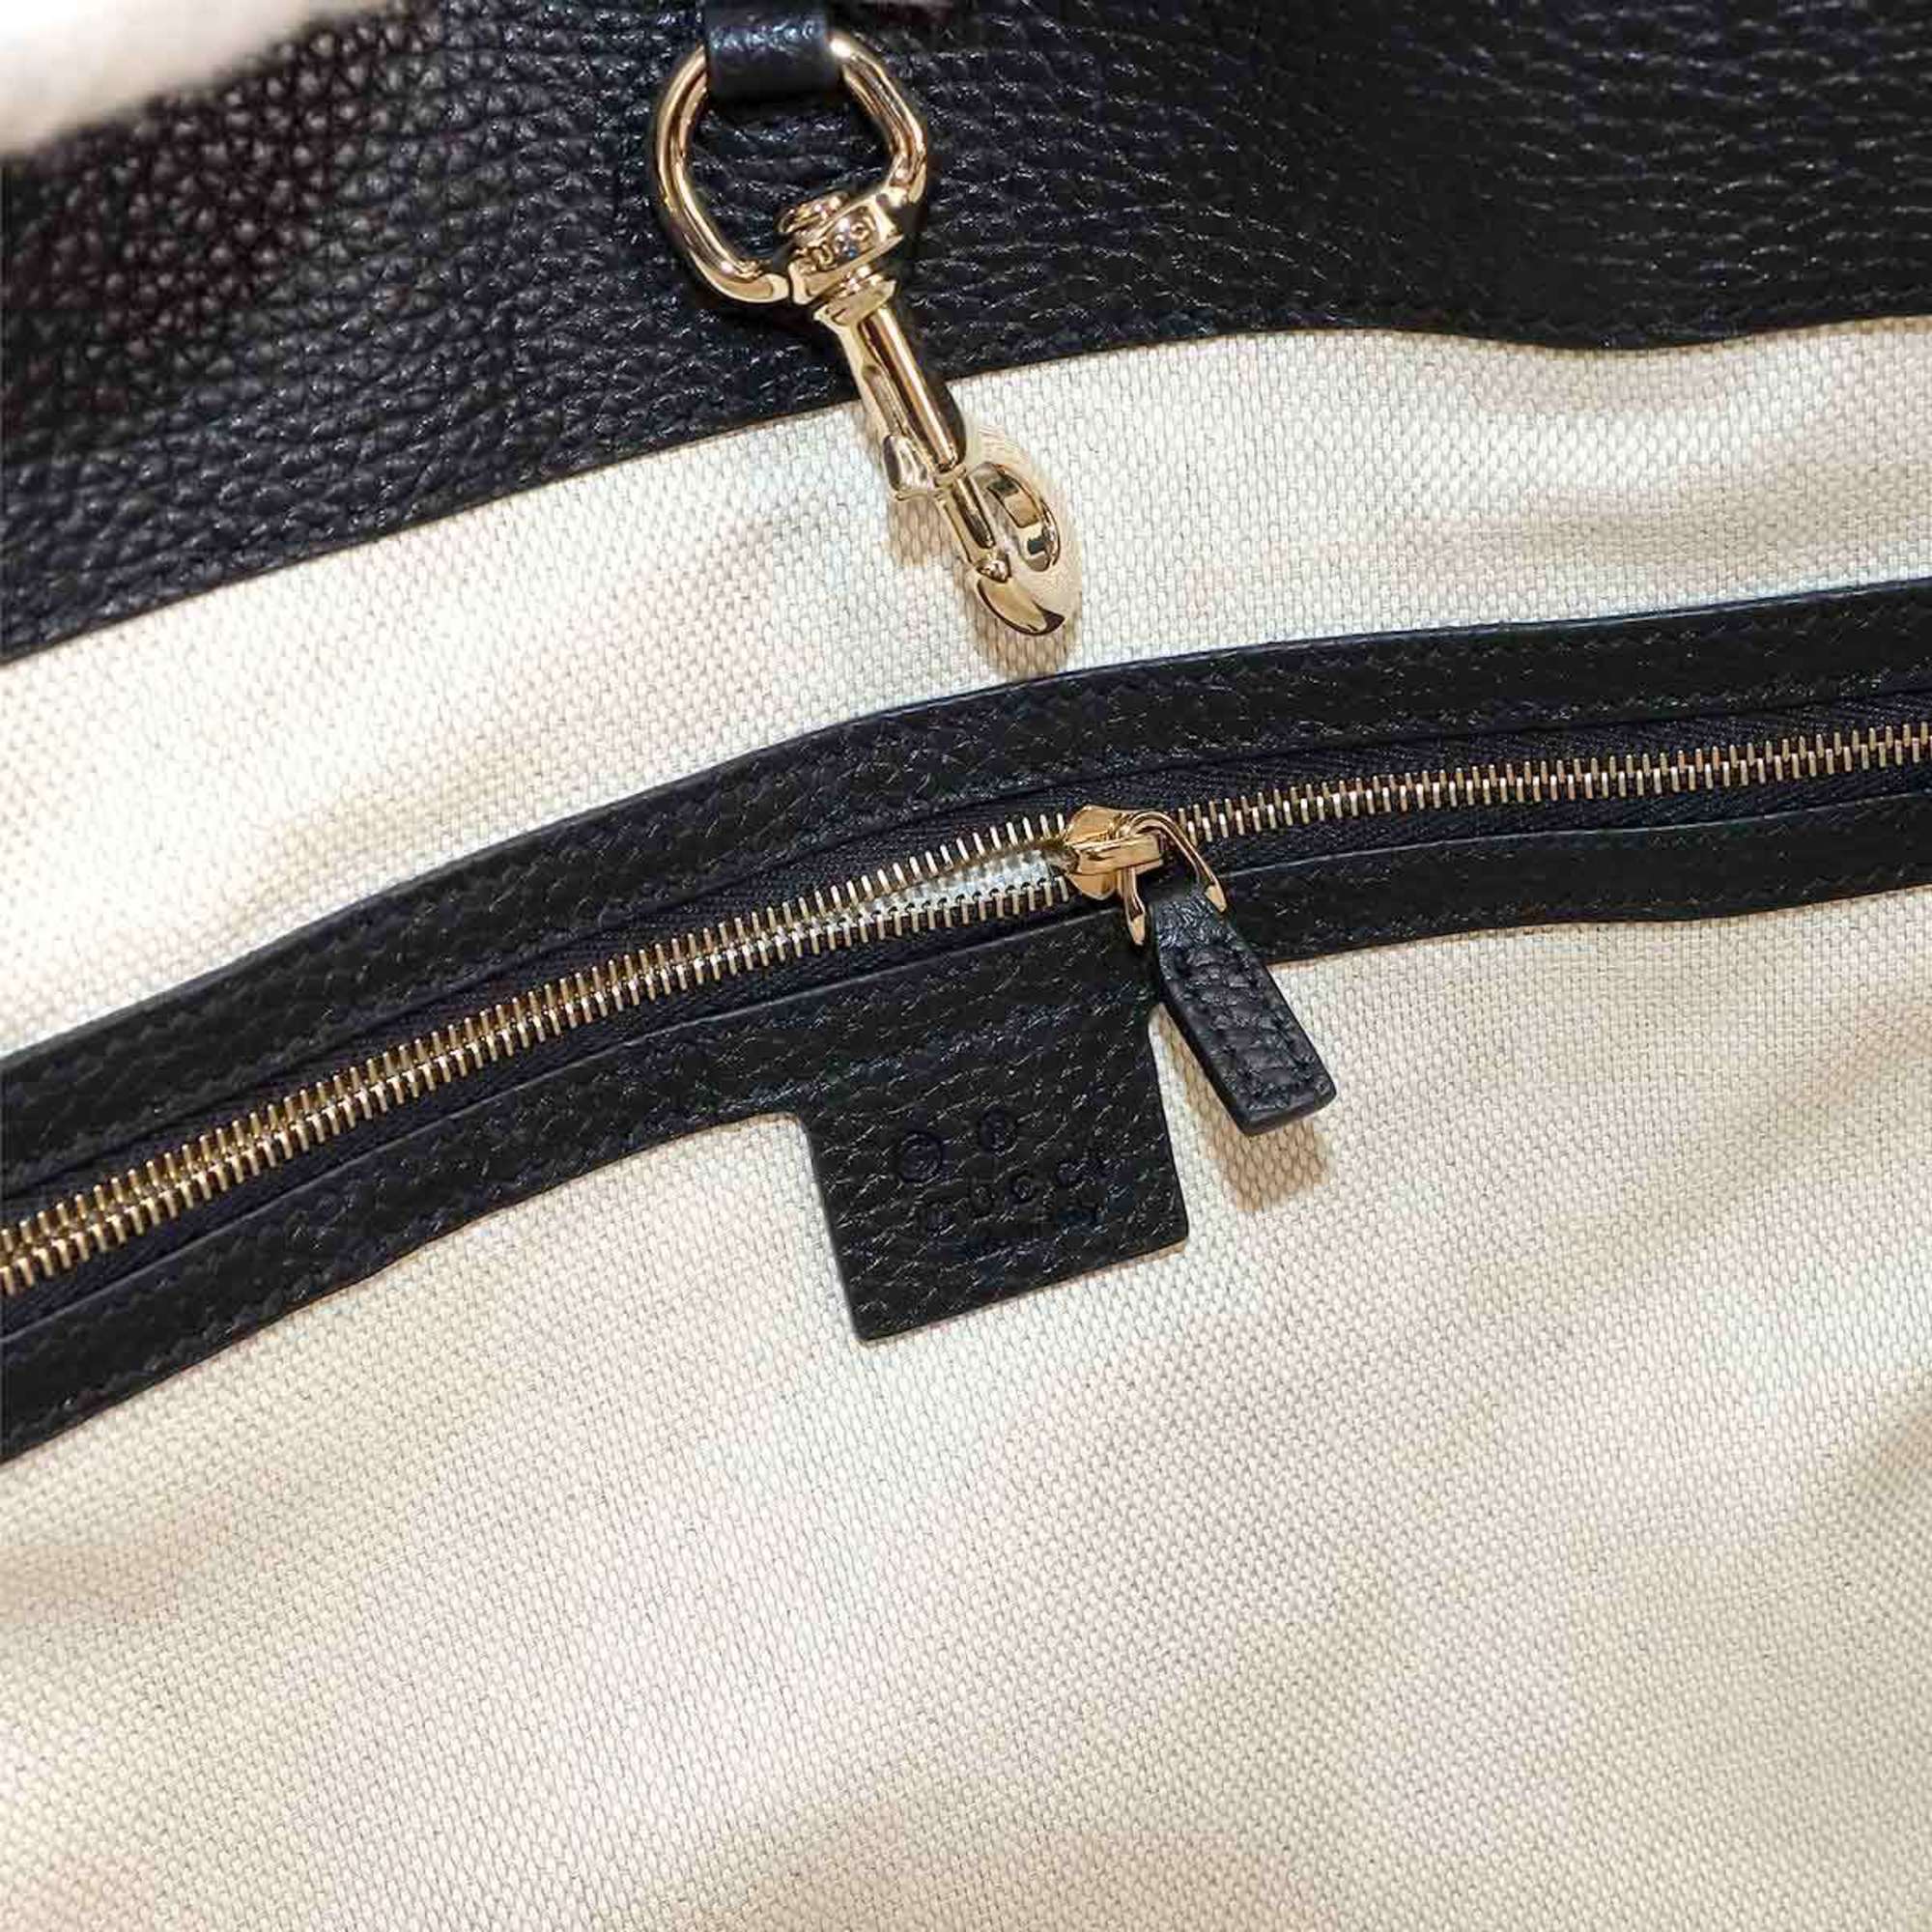 GUCCI Interlocking G Soho Chain Leather Black 536196 Bag